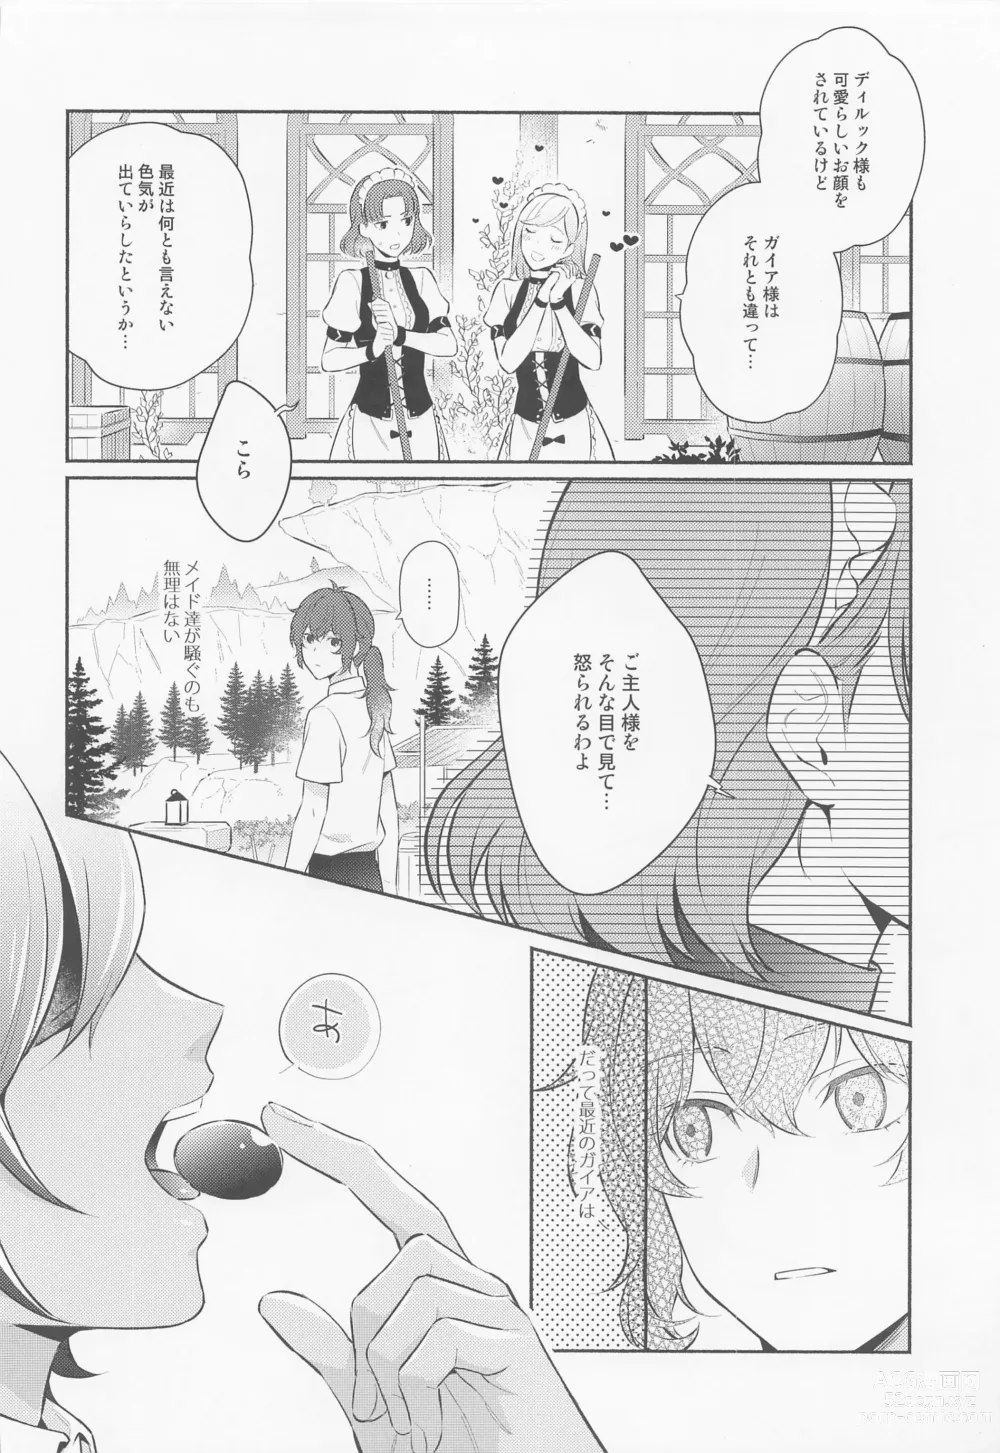 Page 5 of doujinshi Kimi to Yoake o